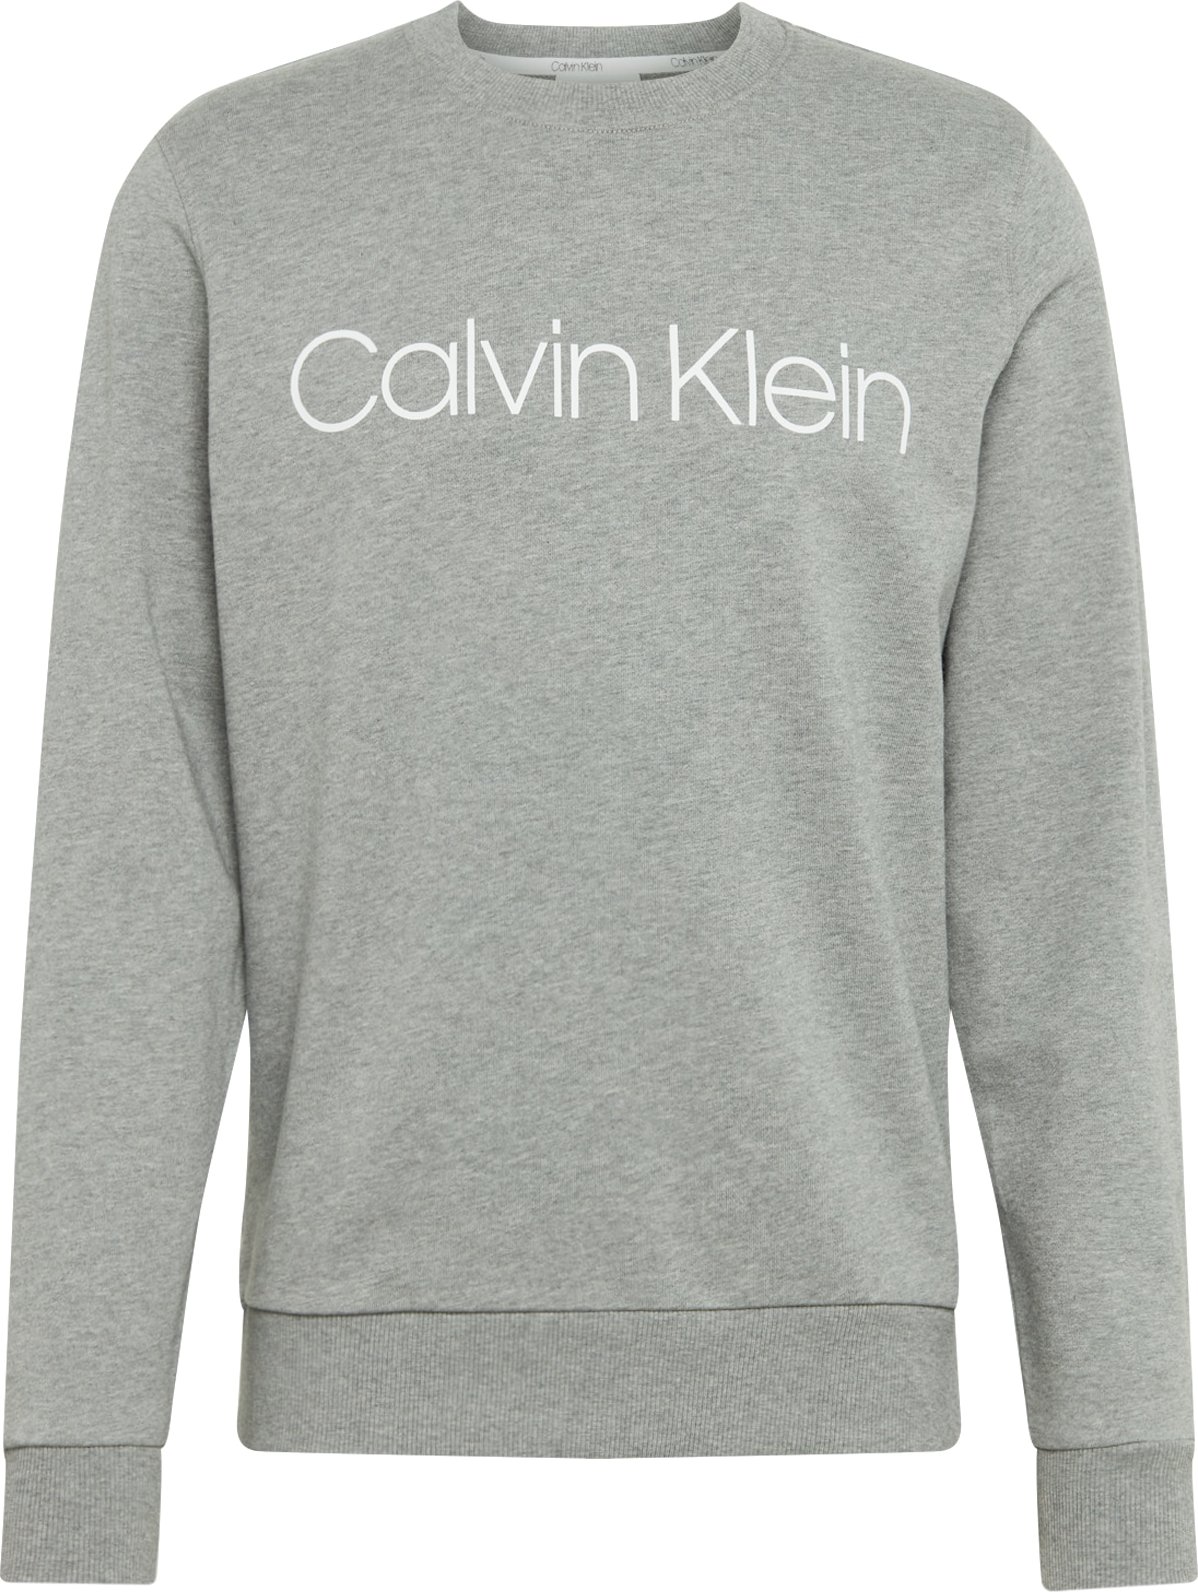 Mikina Calvin Klein šedý melír